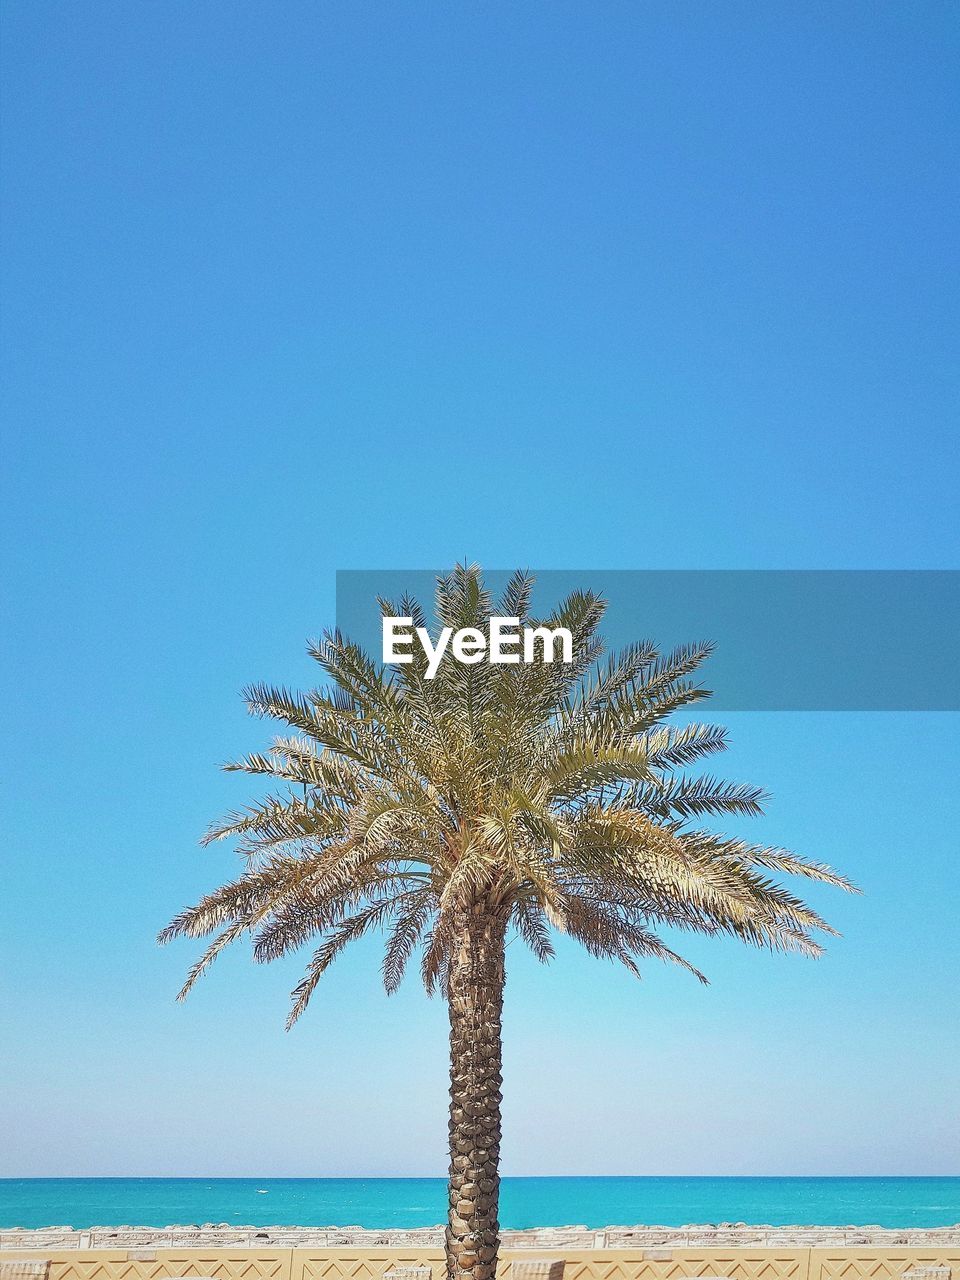 COCONUT PALM TREE AGAINST BLUE SKY